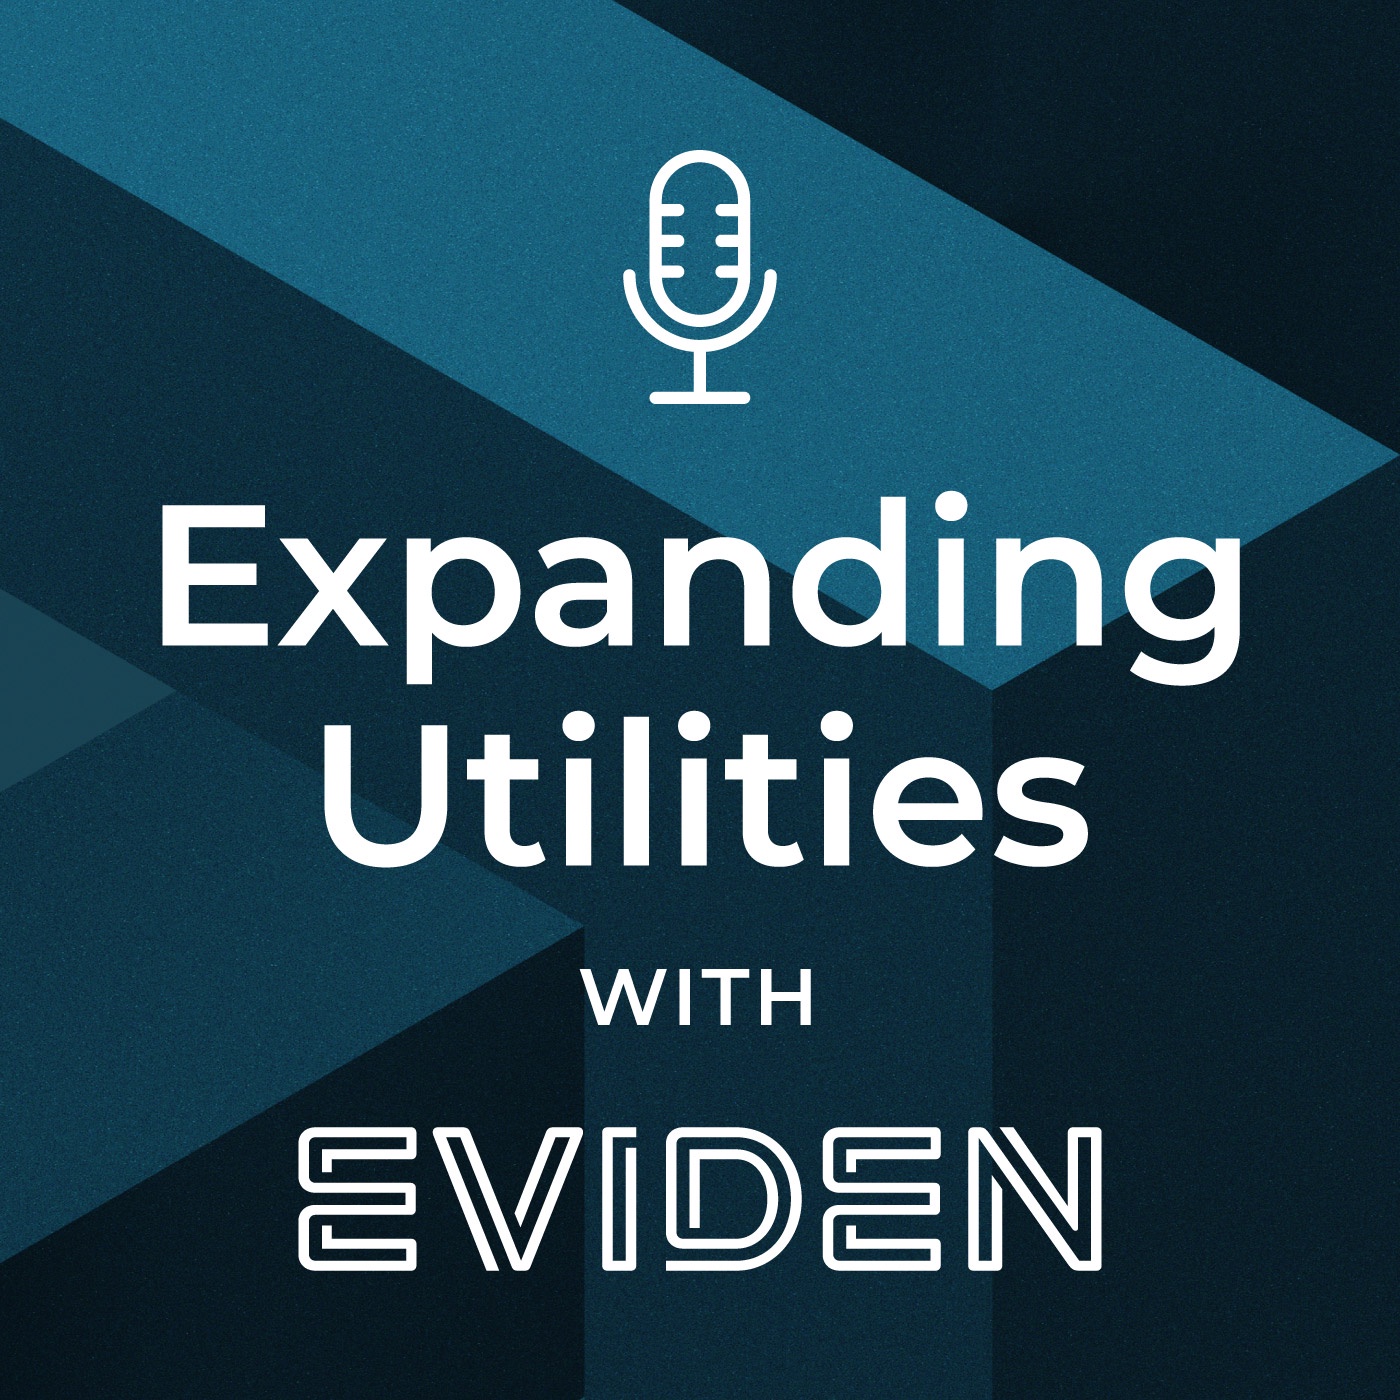 Expanding Utilities with EVIDEN